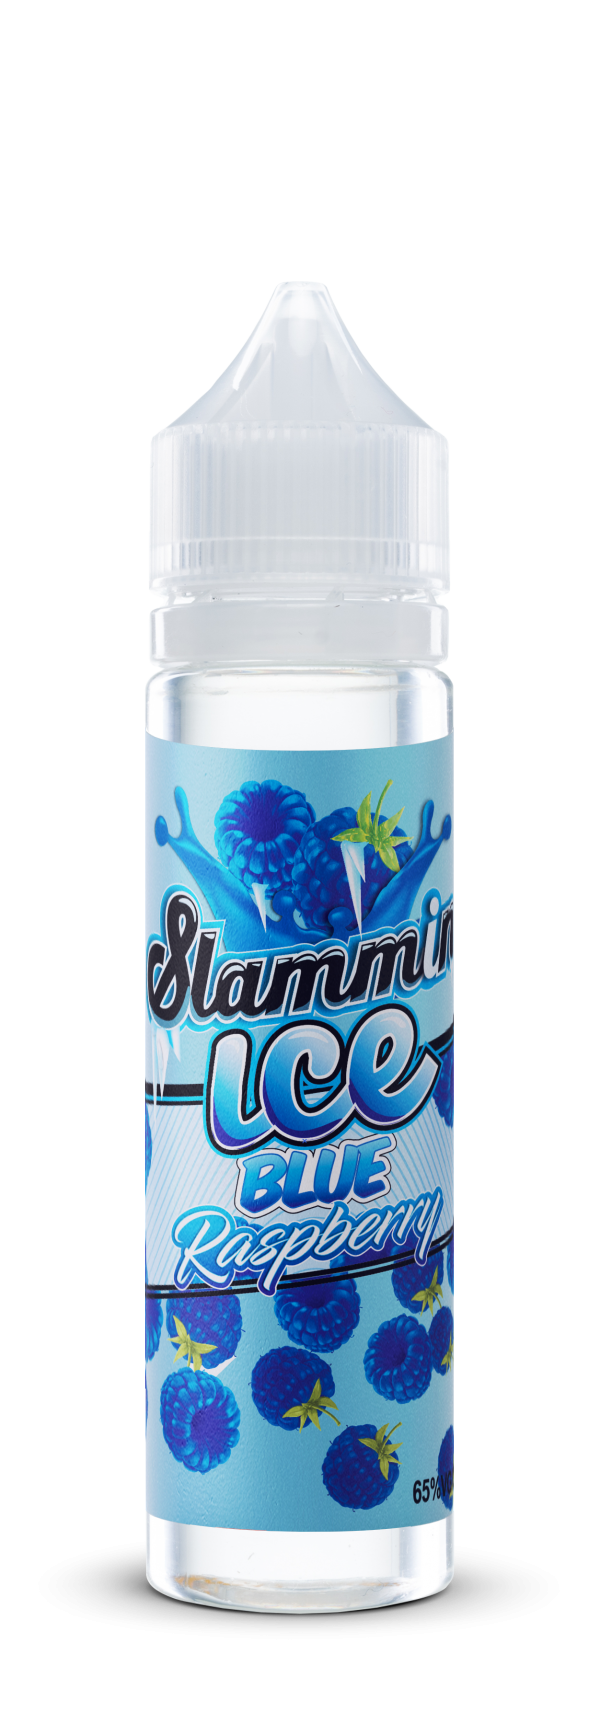 Slammin Blue ICE Raspberry 60ml